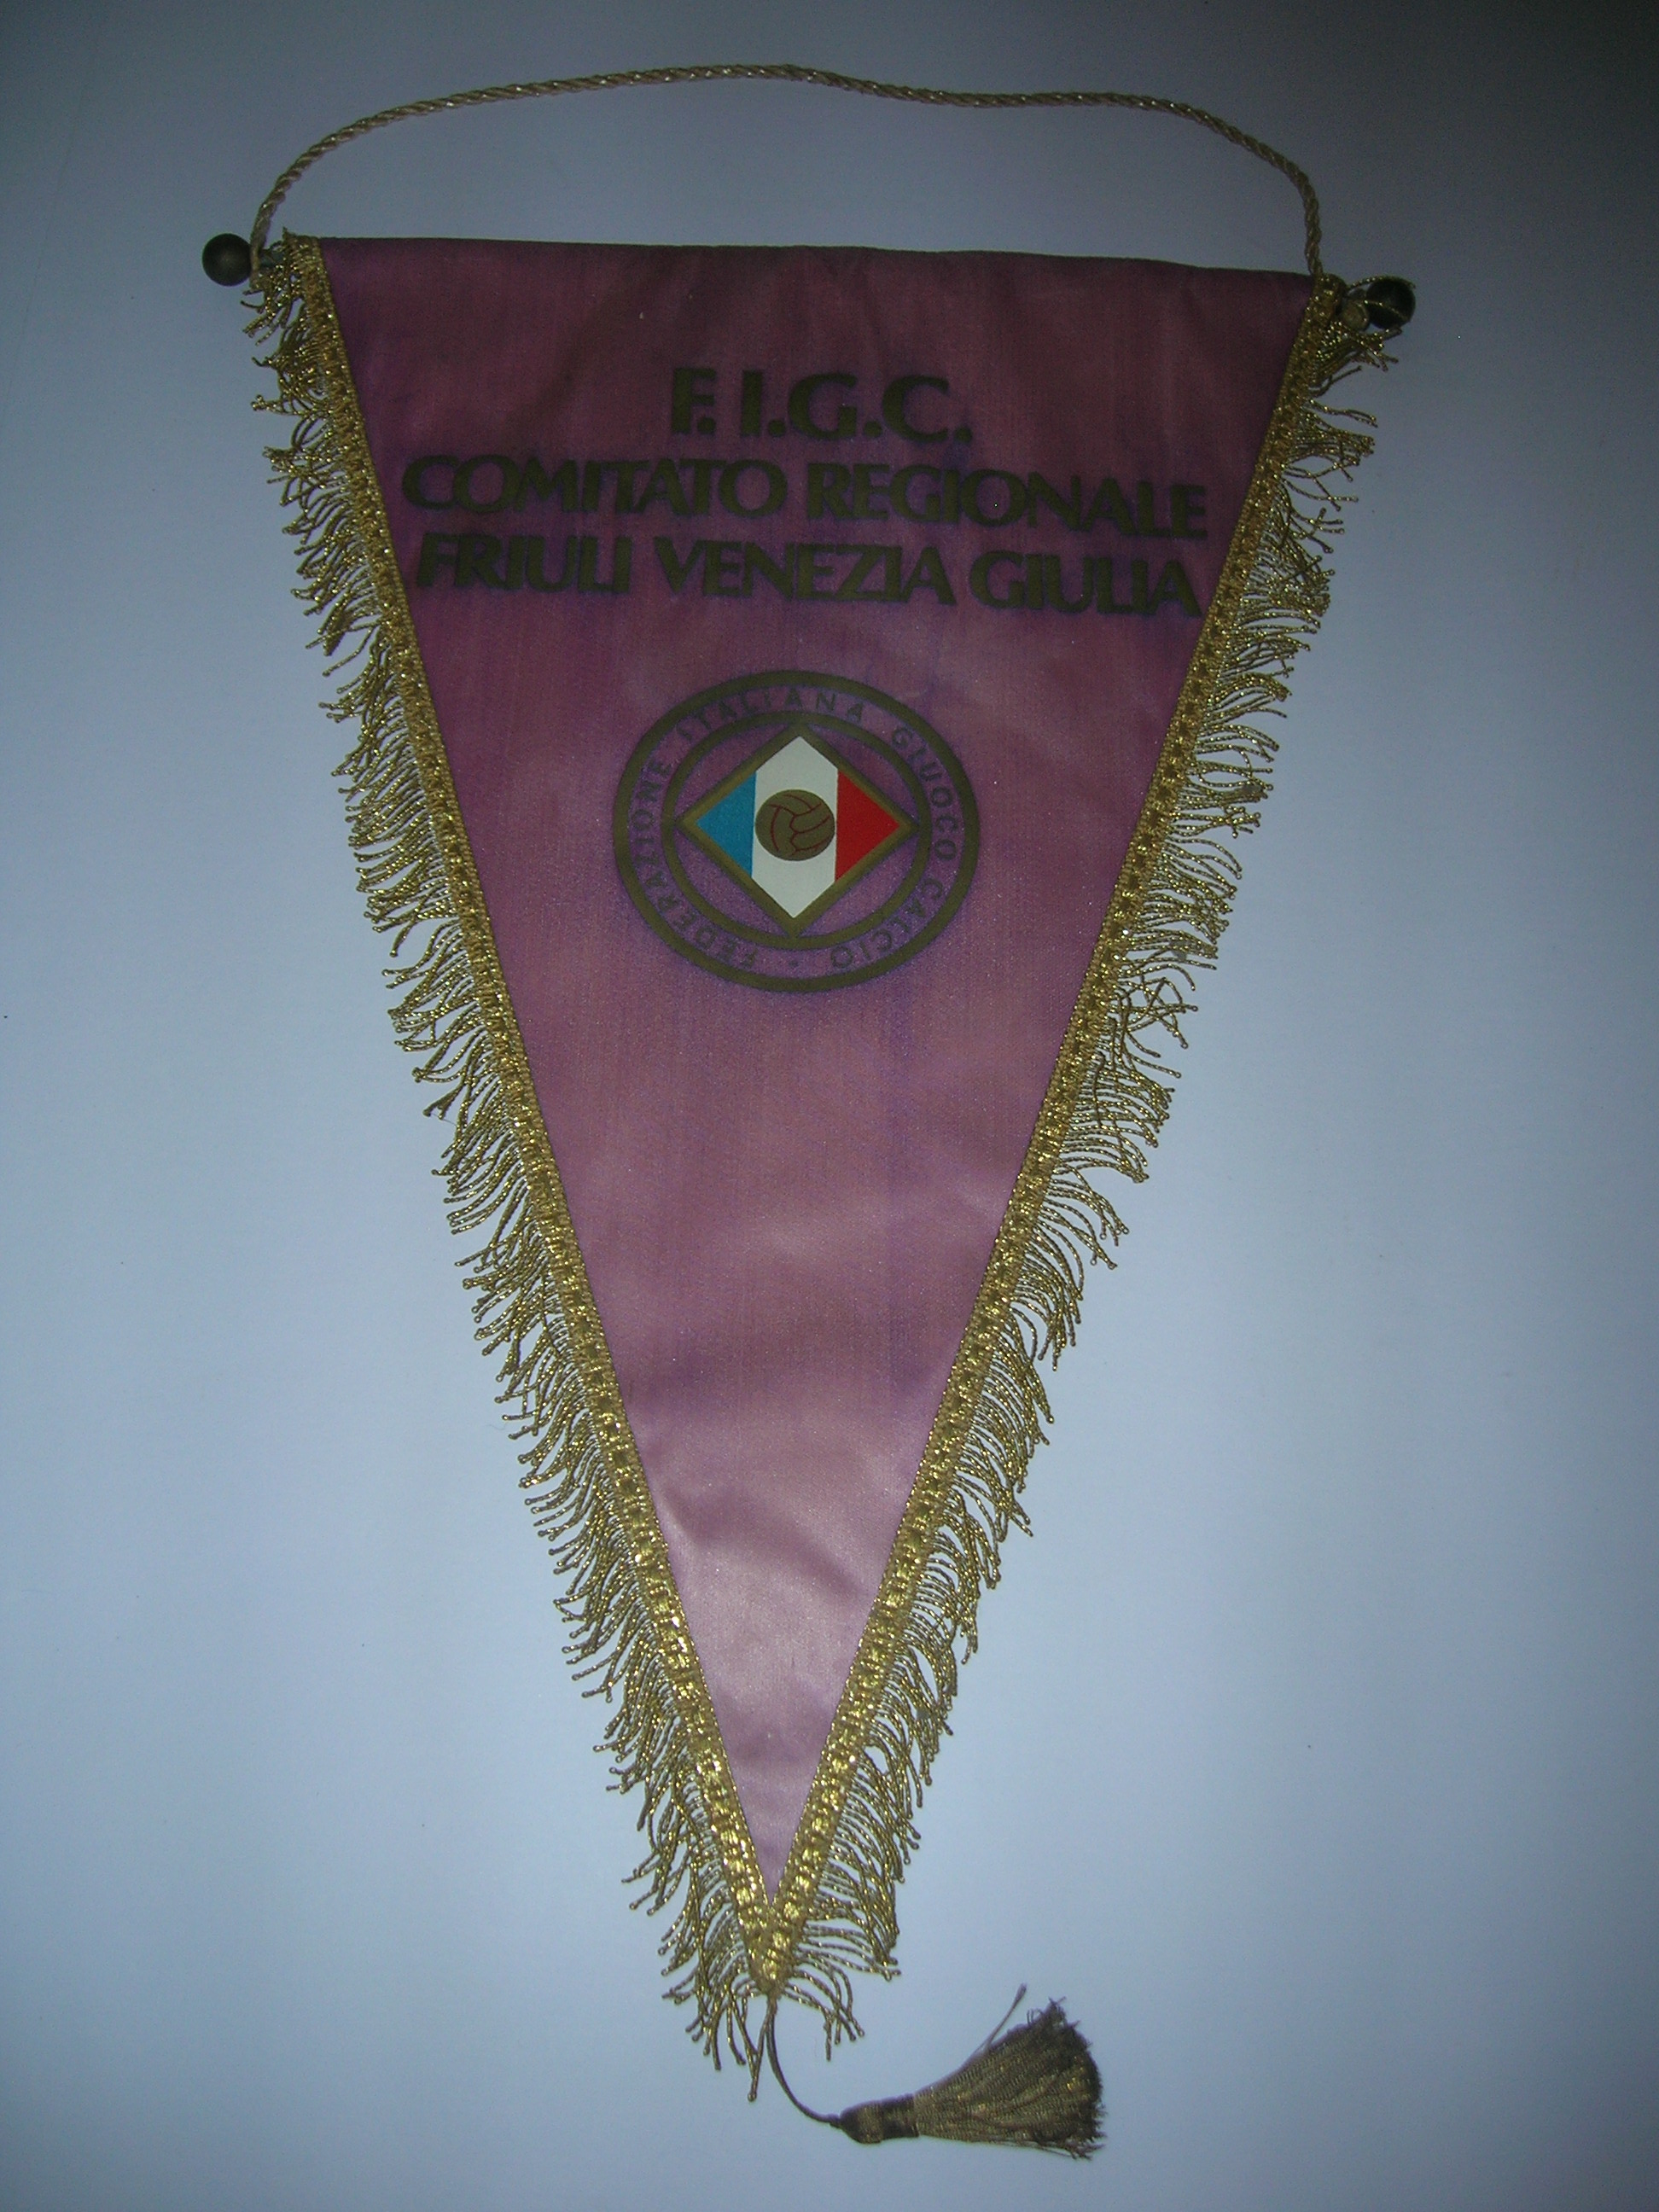 FIGC  Comitato Regionale  FVG D00